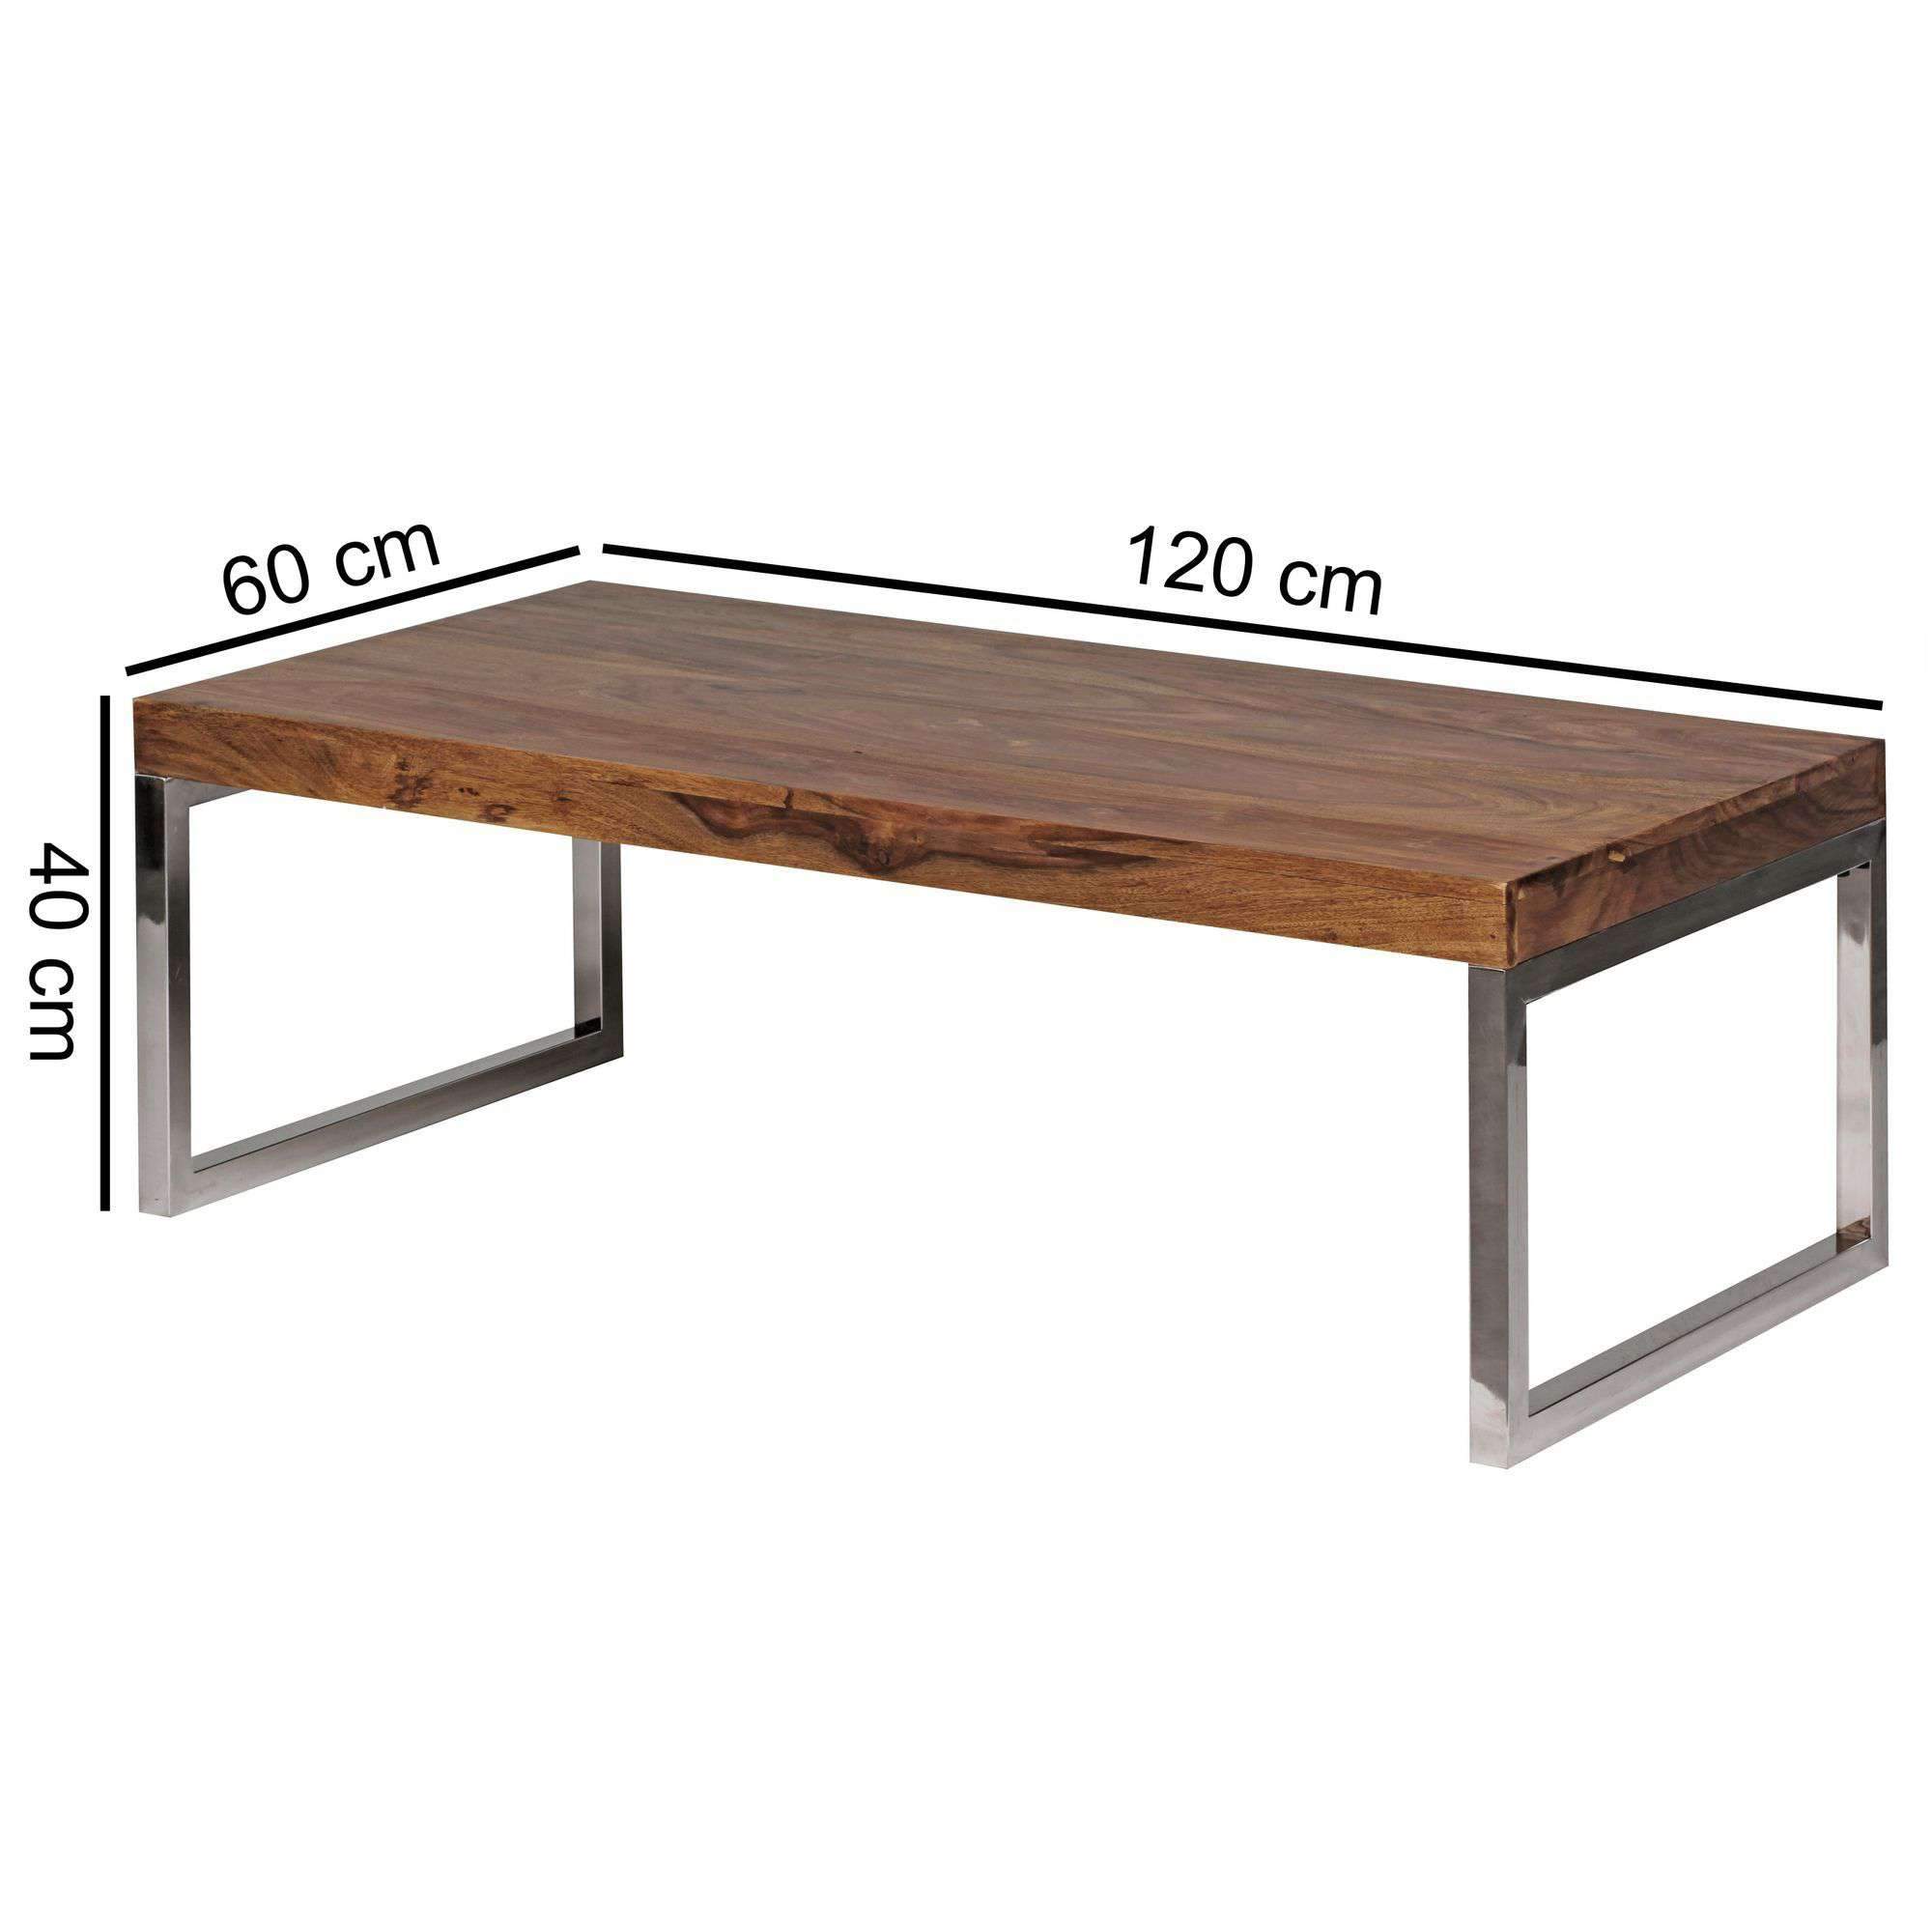 Table basse moderne en bois Nancy's Dunning - Table d'appoint - Table - Tables basses - Table